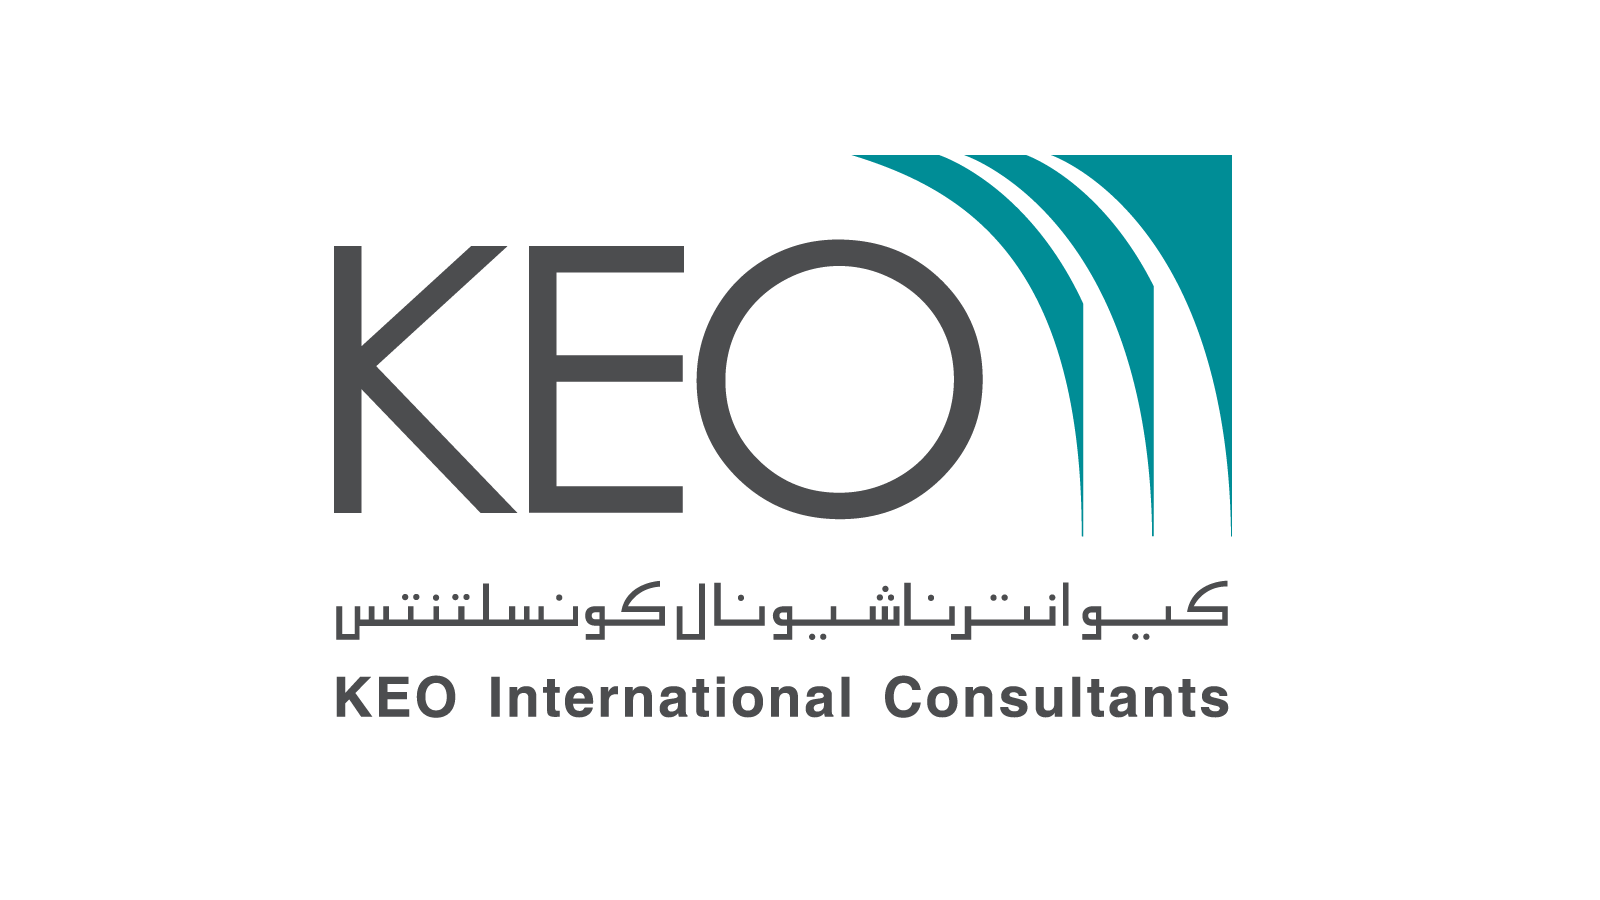 Keo Logo - KEO International Consultants logo | Dwglogo